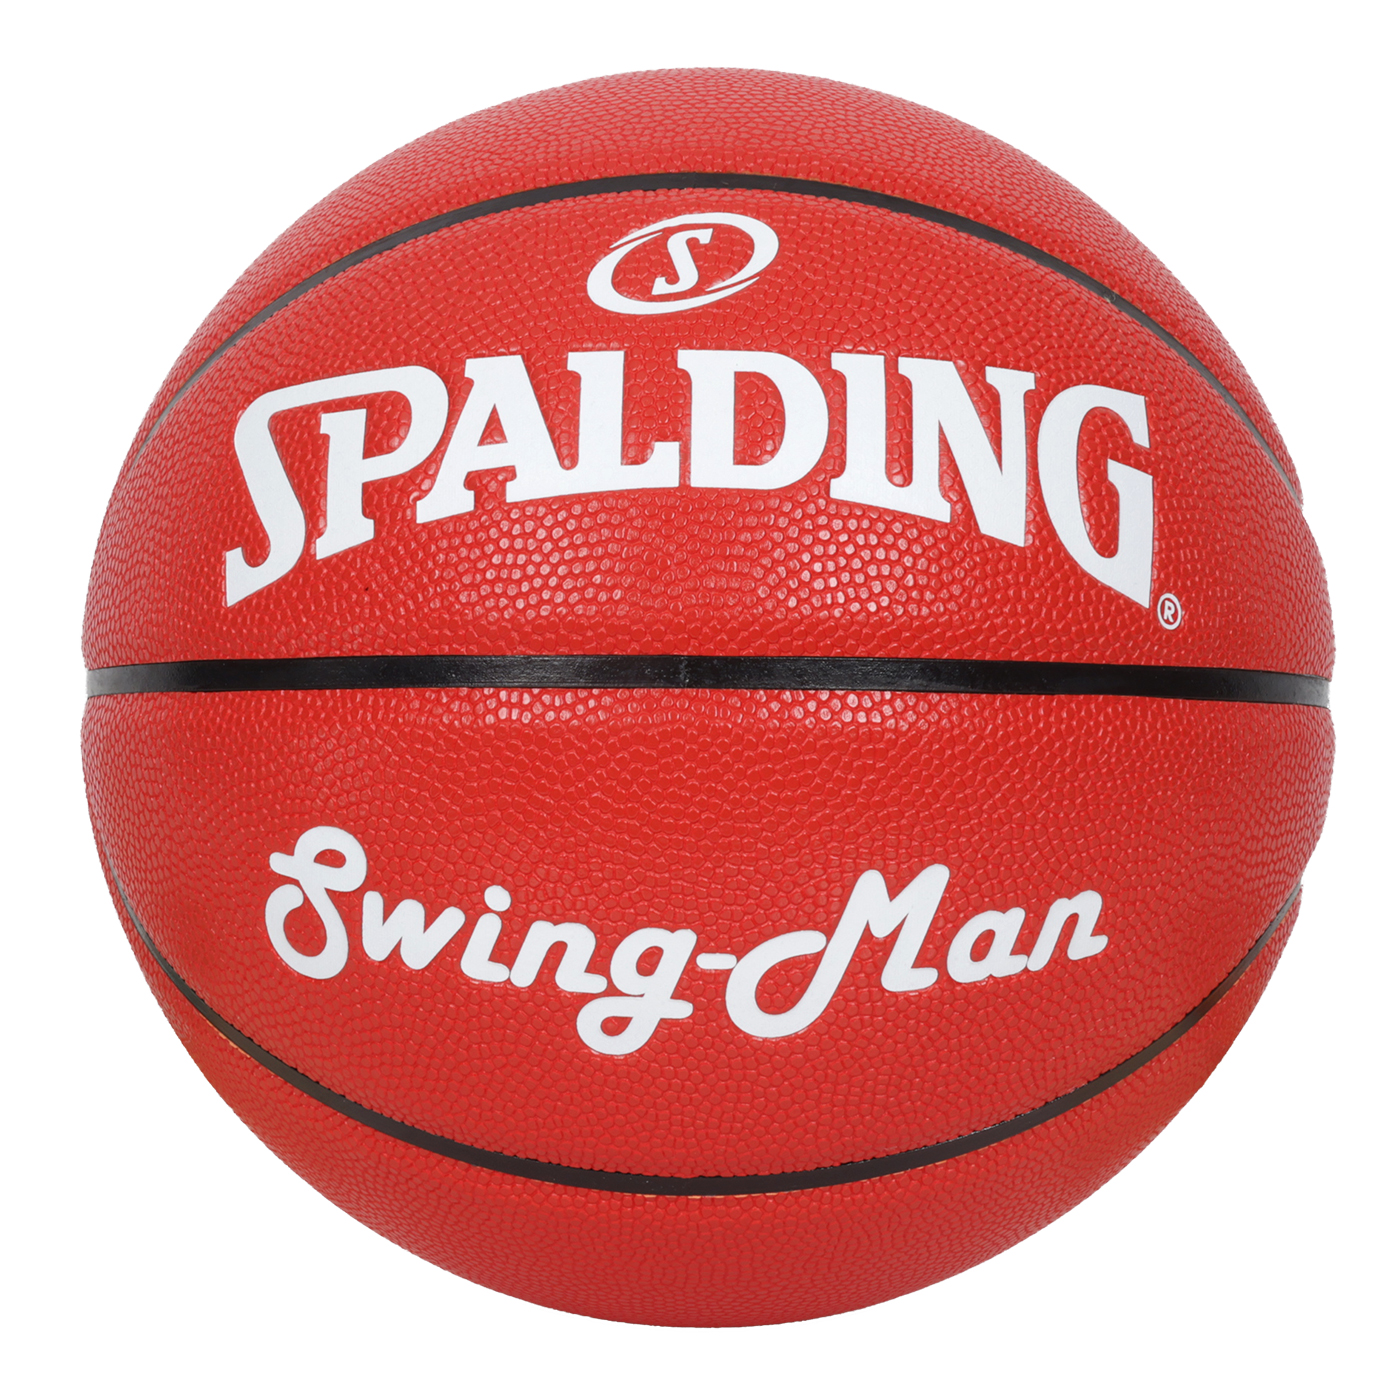 SPALDING Swingman系列#7合成皮籃球  SPB1131B7 - 紅白